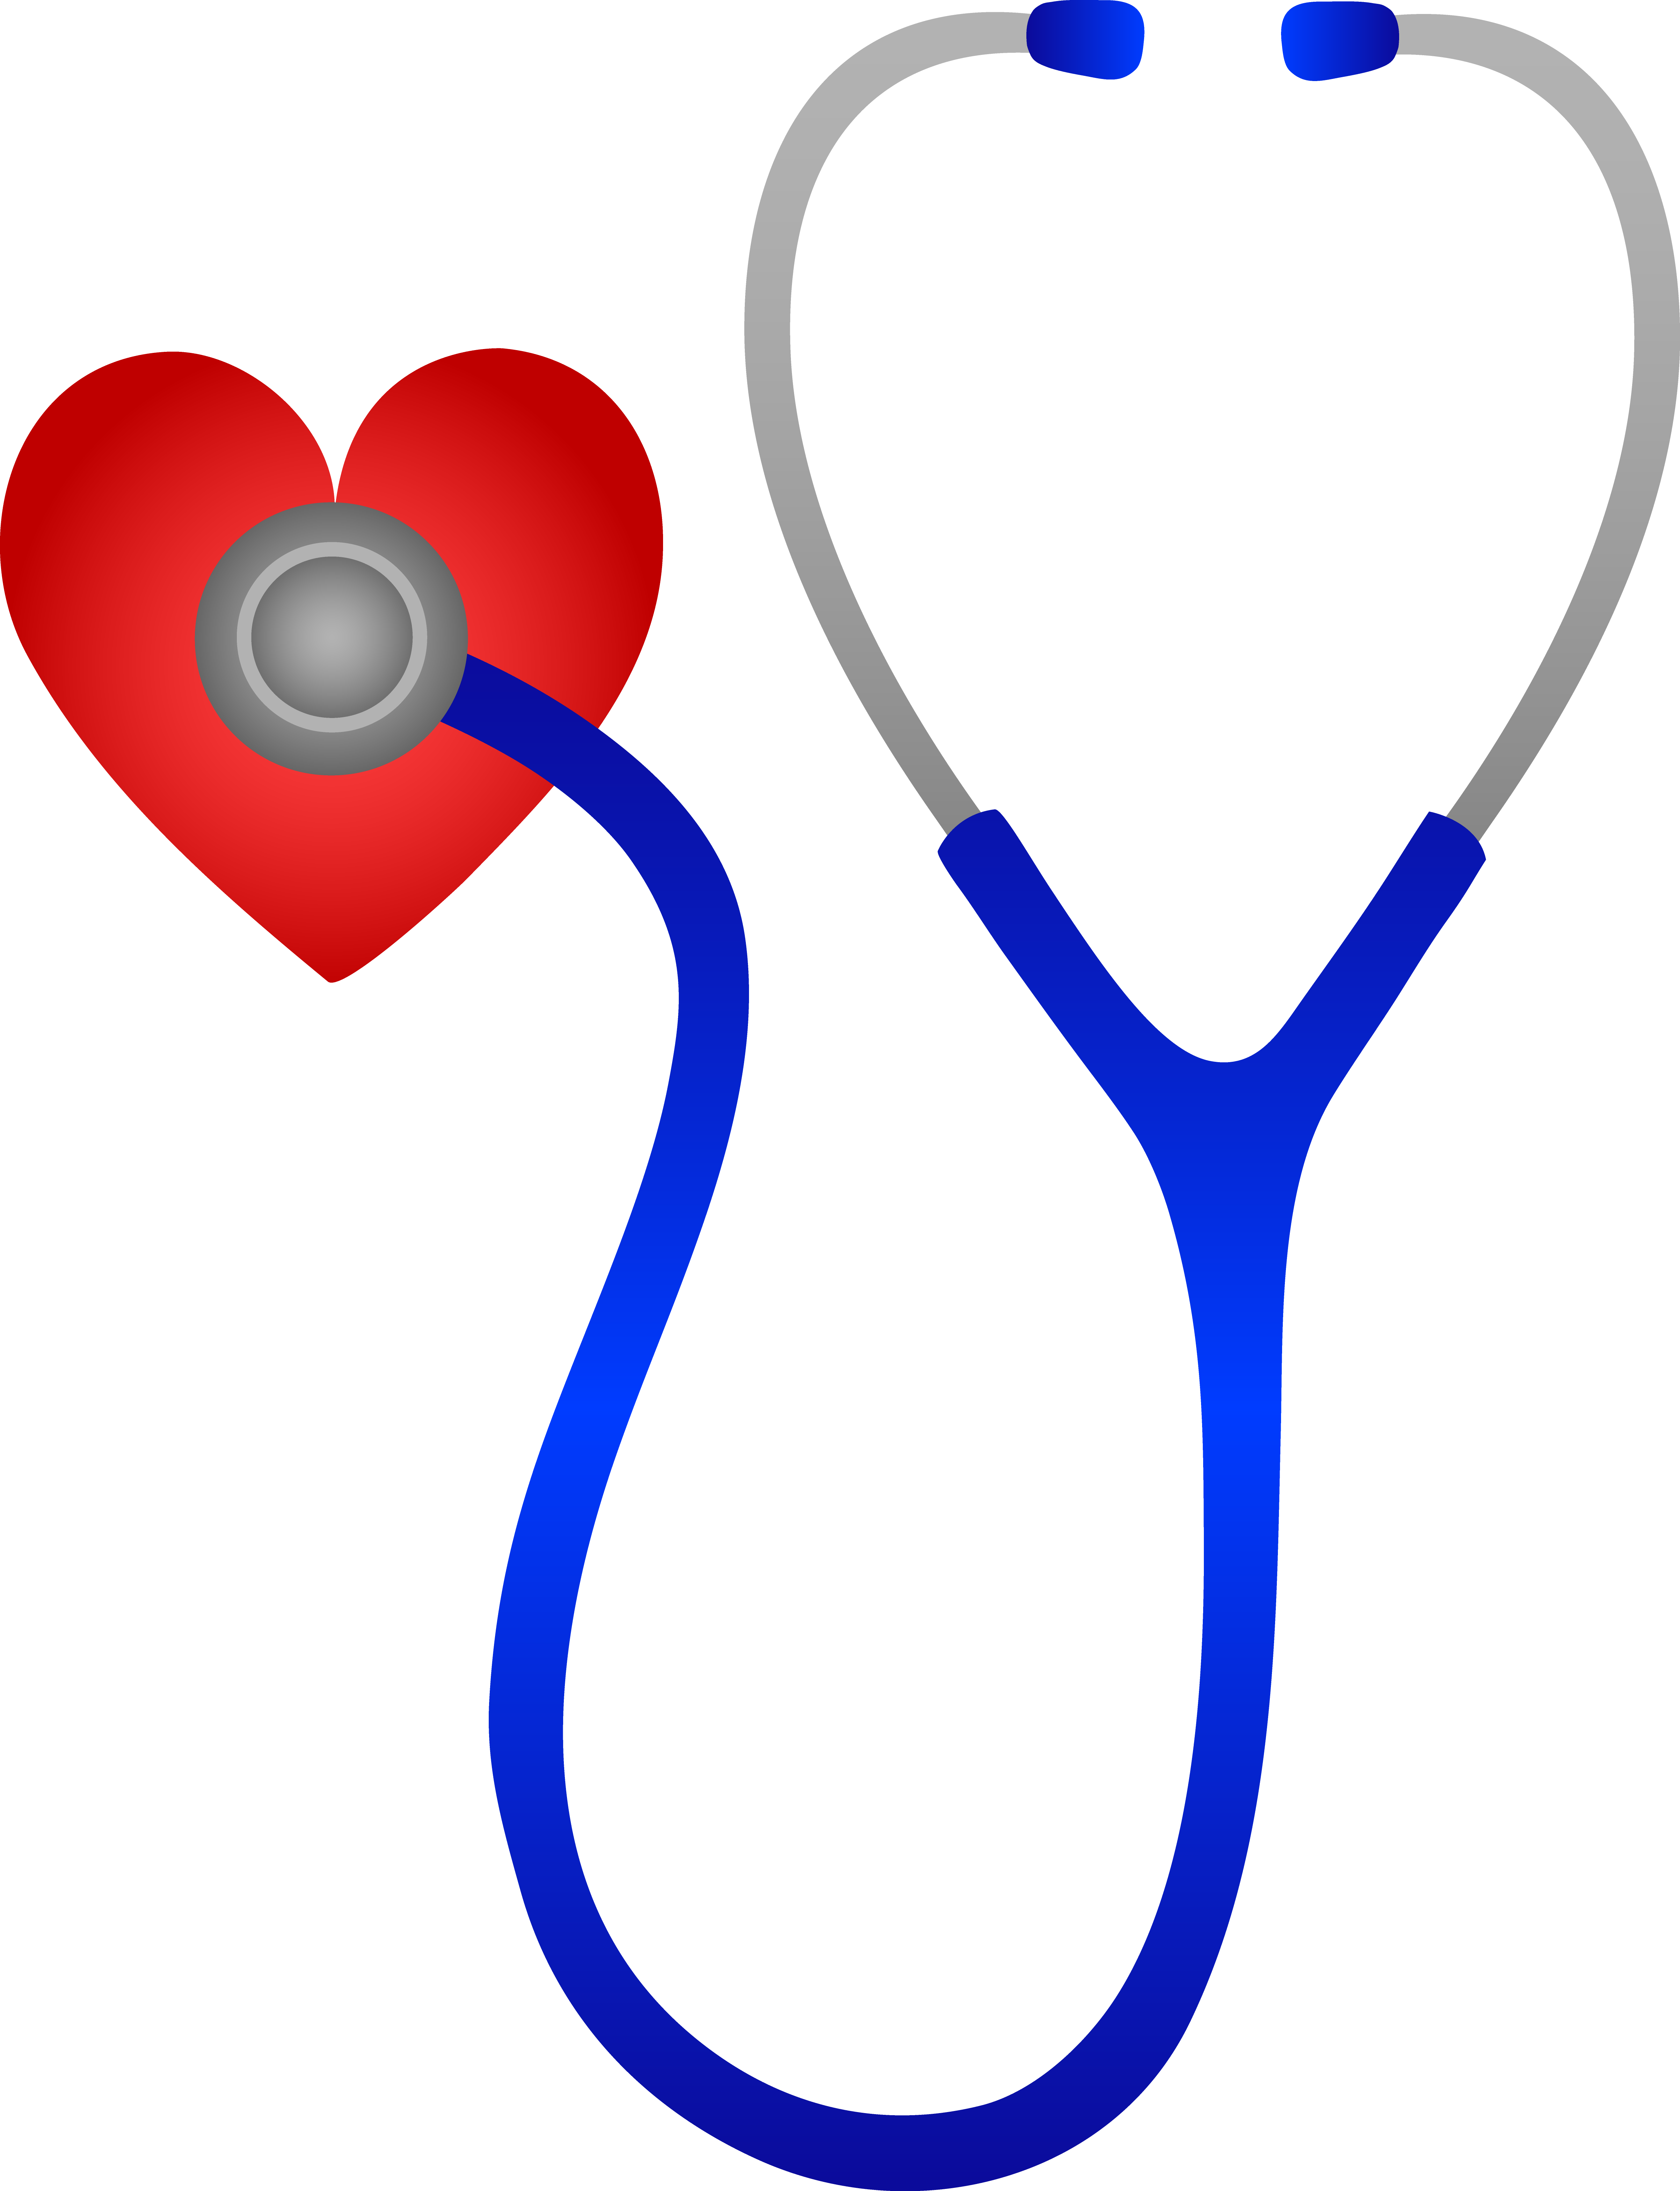 Stethoscope clipart heart